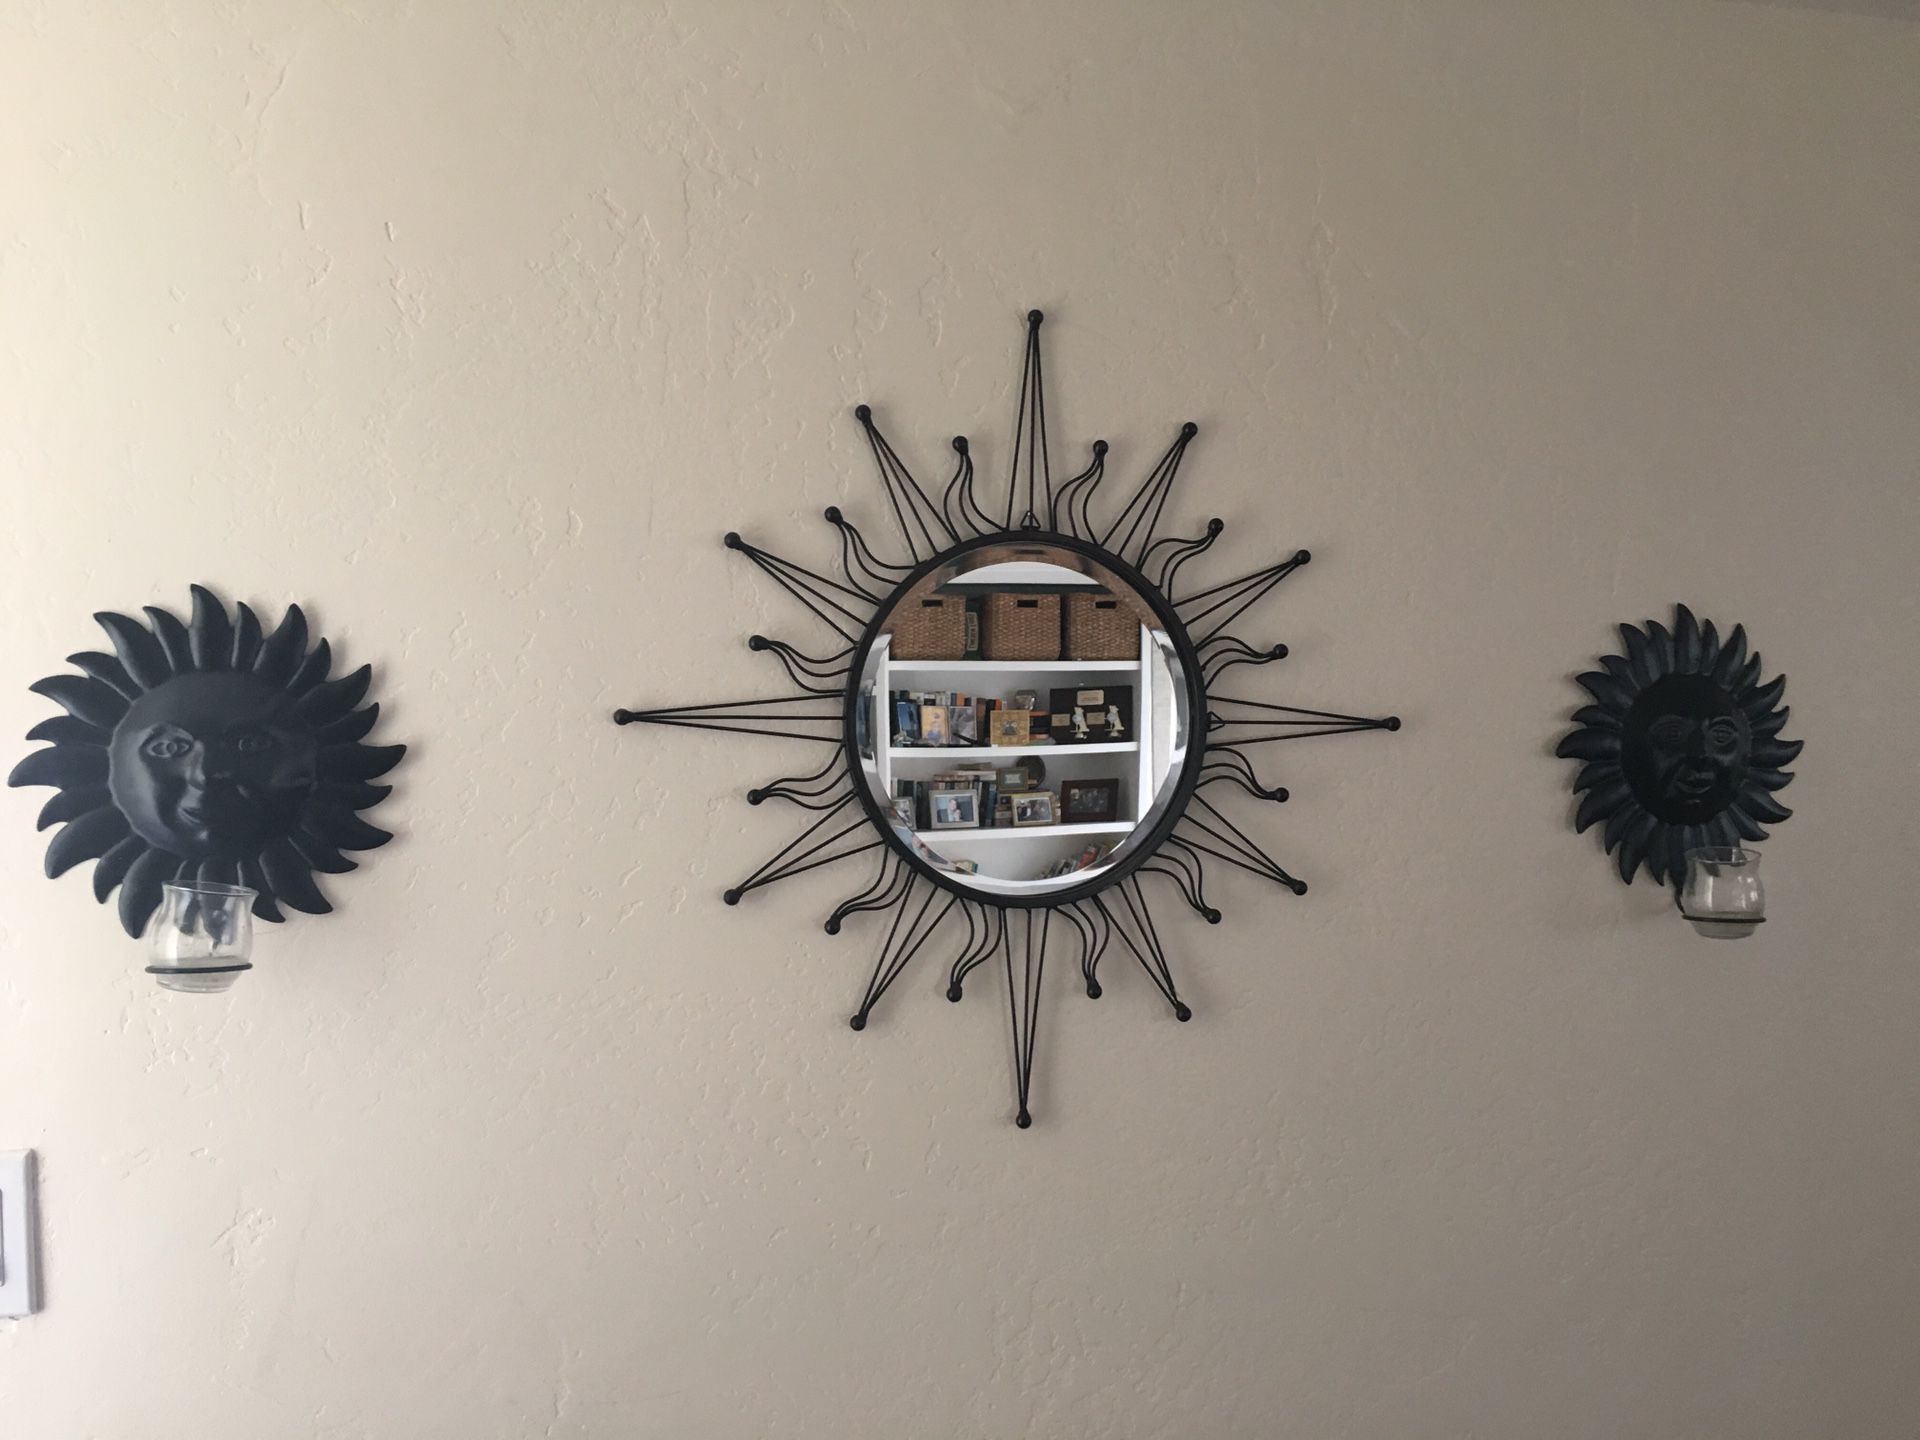 Sun wall decor - 2 sun sconces and 1 sun mirror